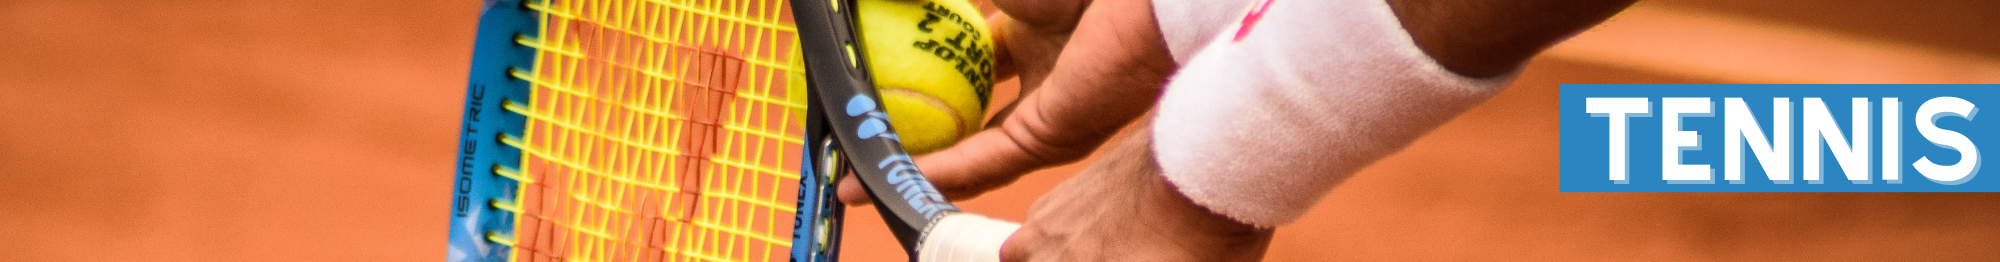 Tennis9